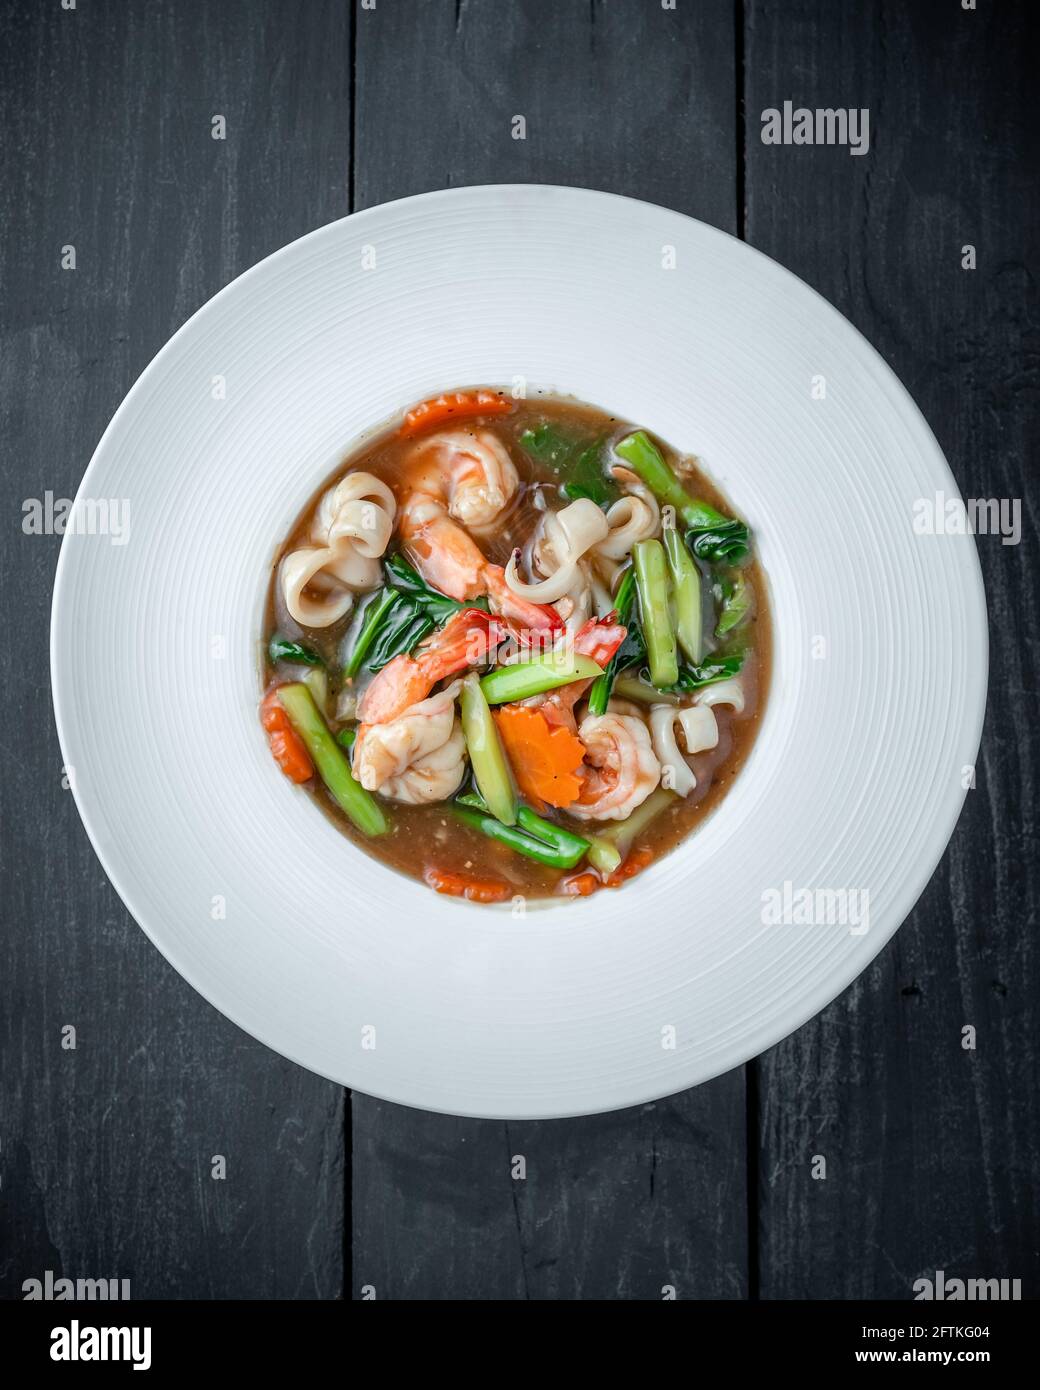 Un plato de fideos Thai Rat Na con marisco, brócoli chino y salsa espesa Foto de stock